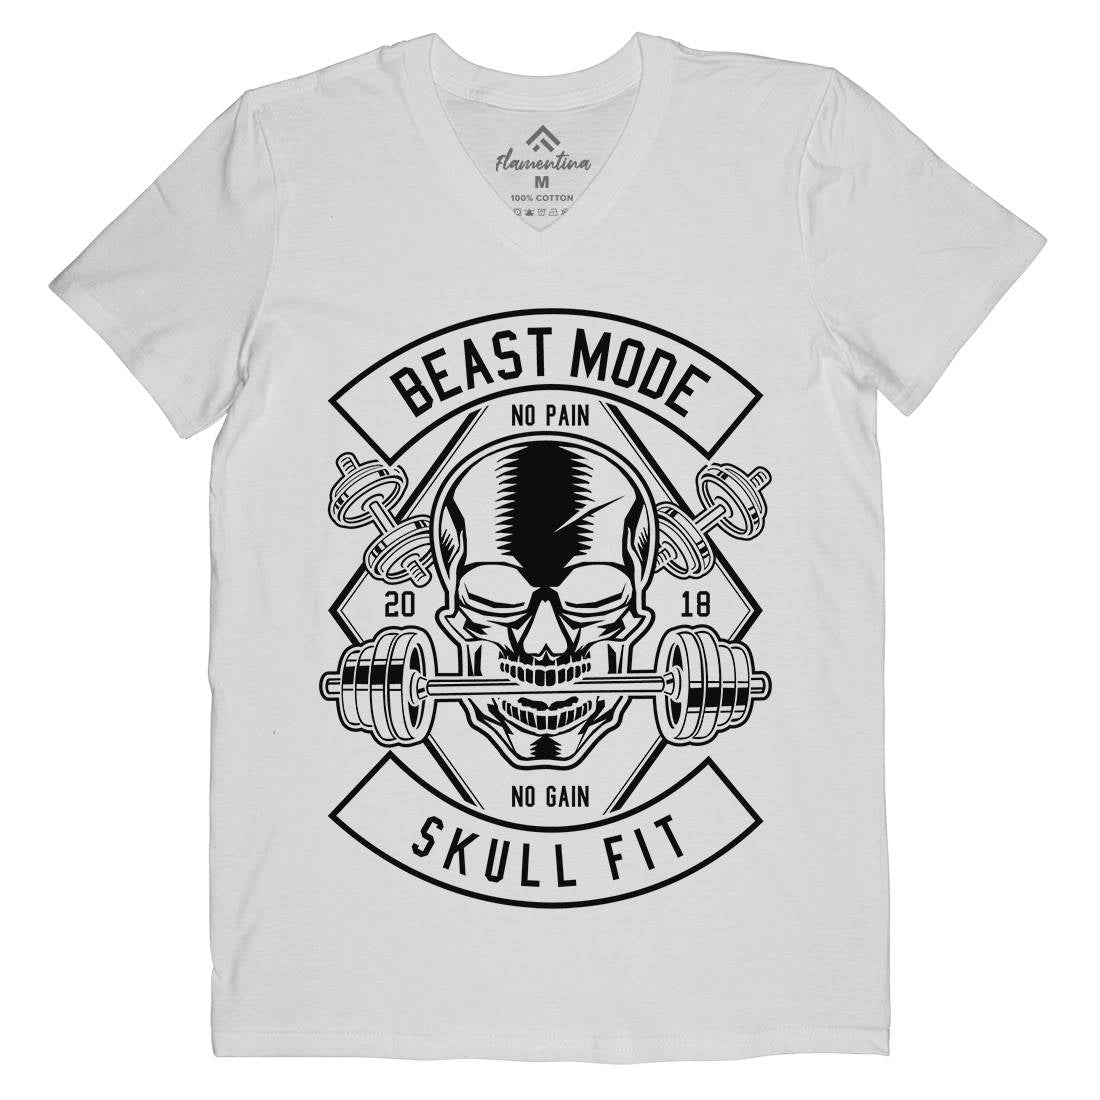 Skull Fit Mens V-Neck T-Shirt Gym B628